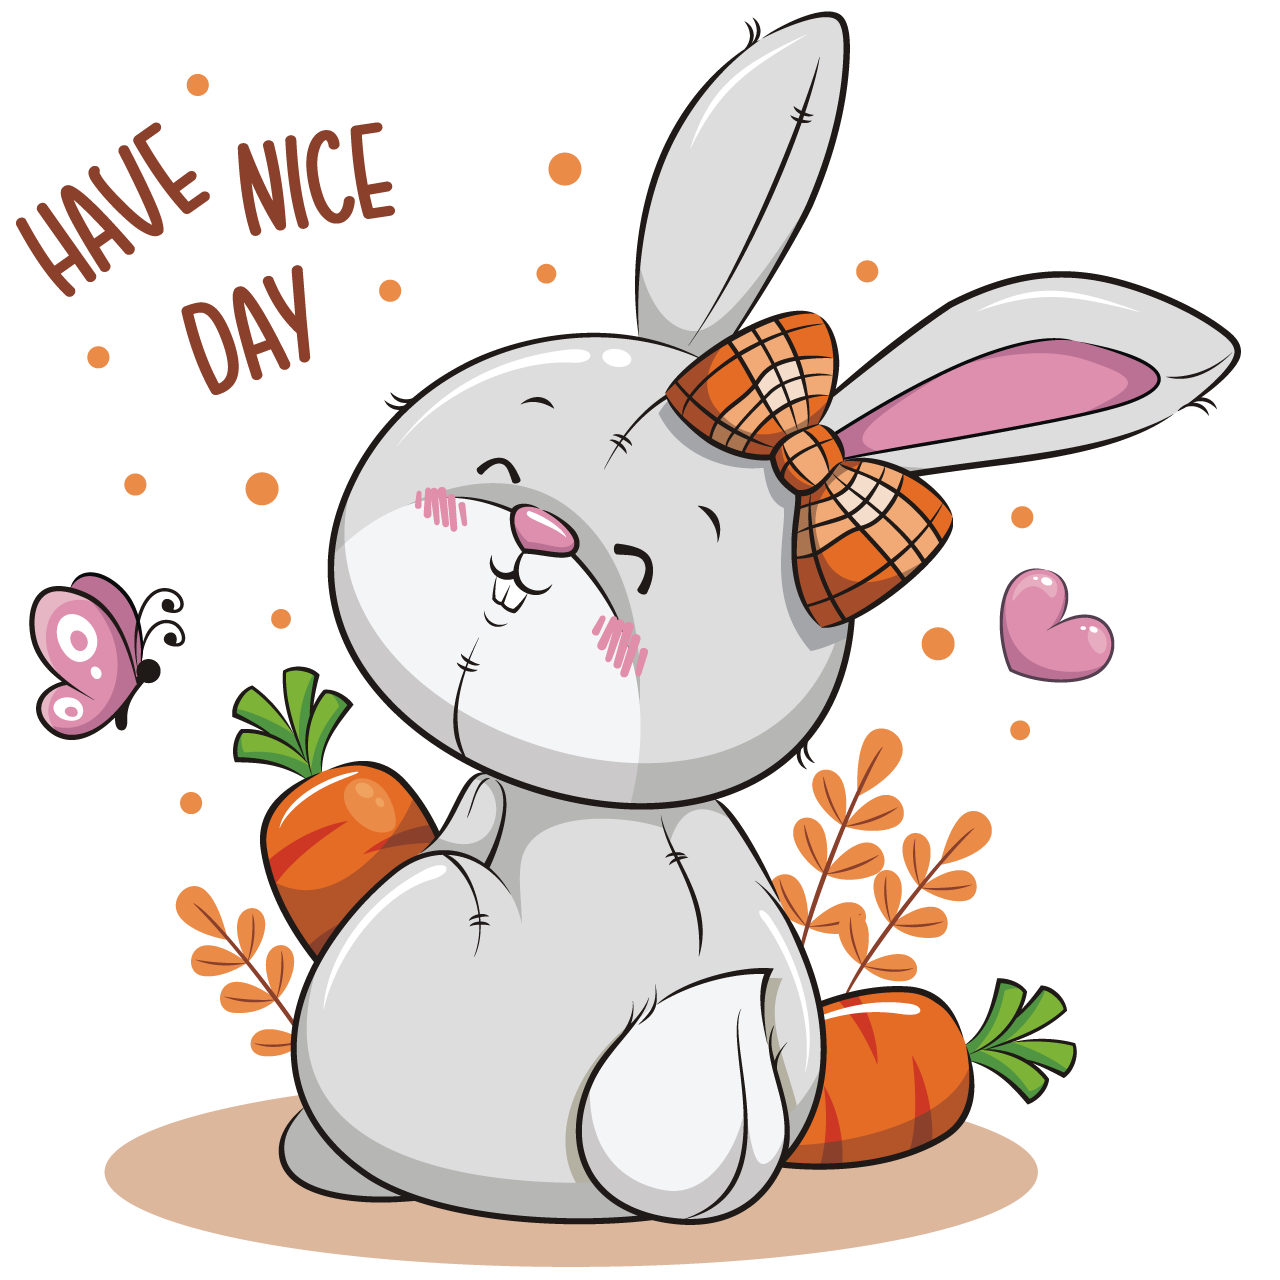 Hi clipart cute bunny rabbit with orange carrot cartoon illustration transparent background image